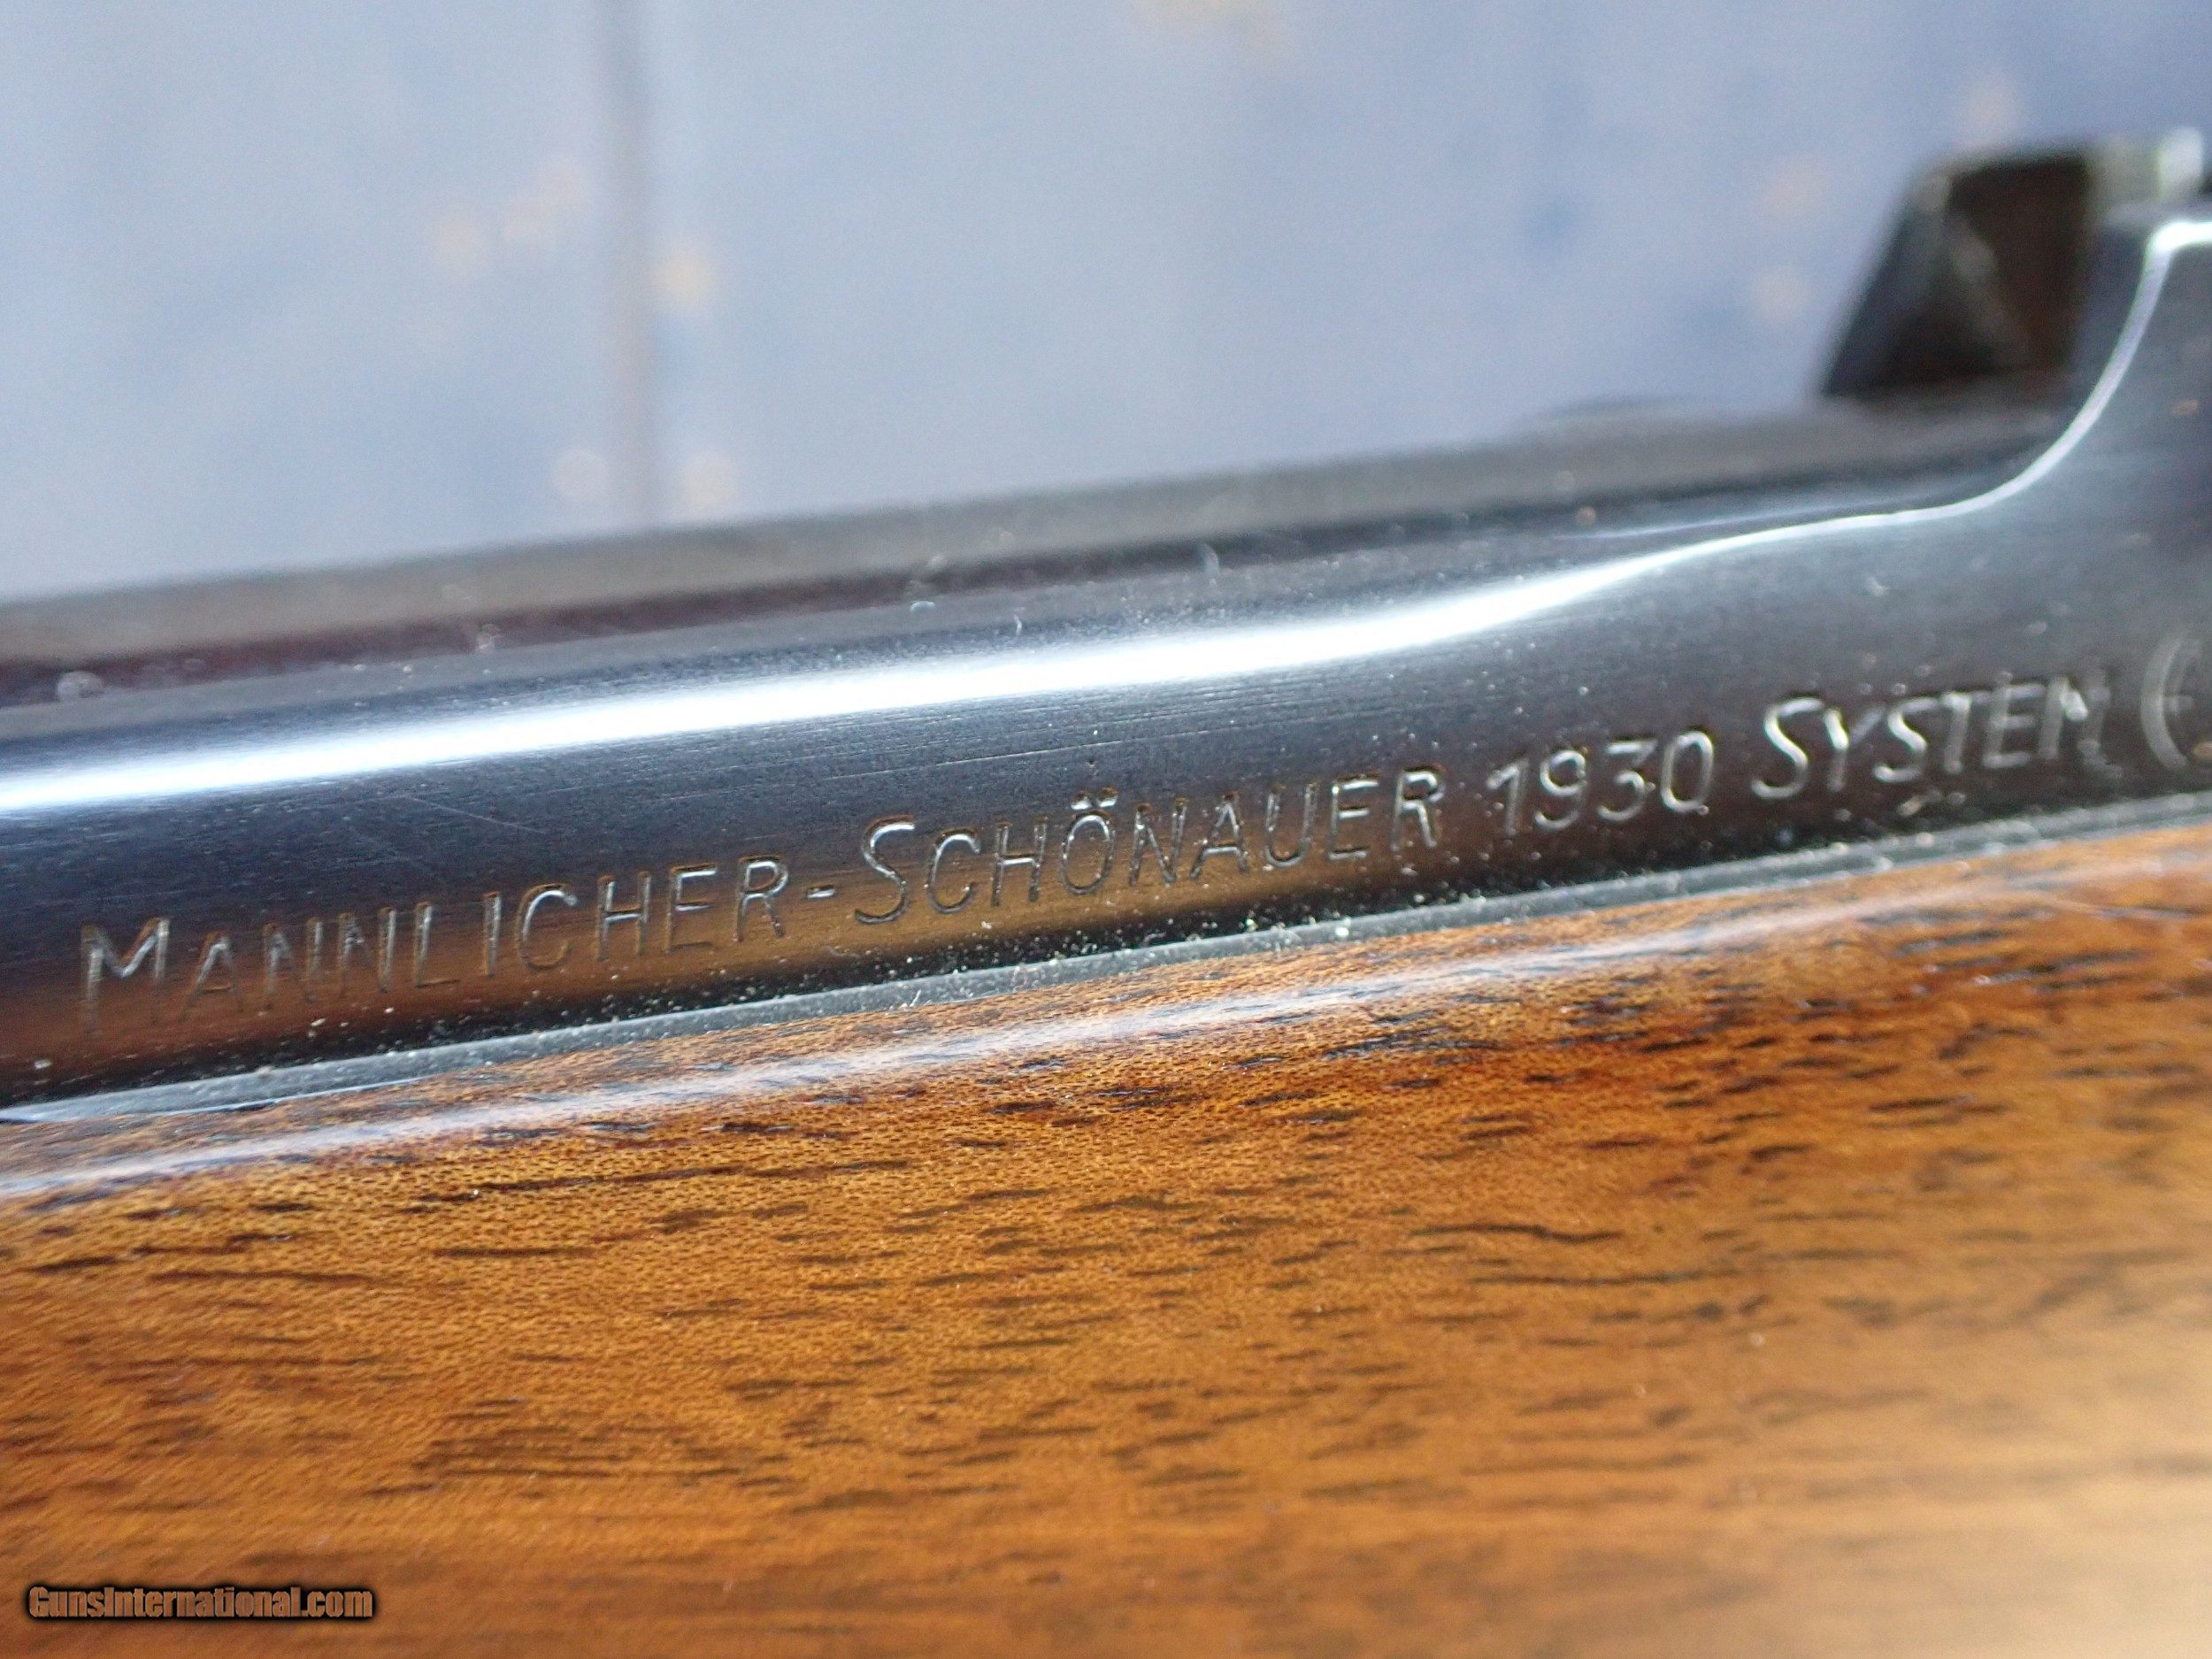 1960 Print Ad of Mannlicher Schoenauer Carbine Rifle w Kahles Scope